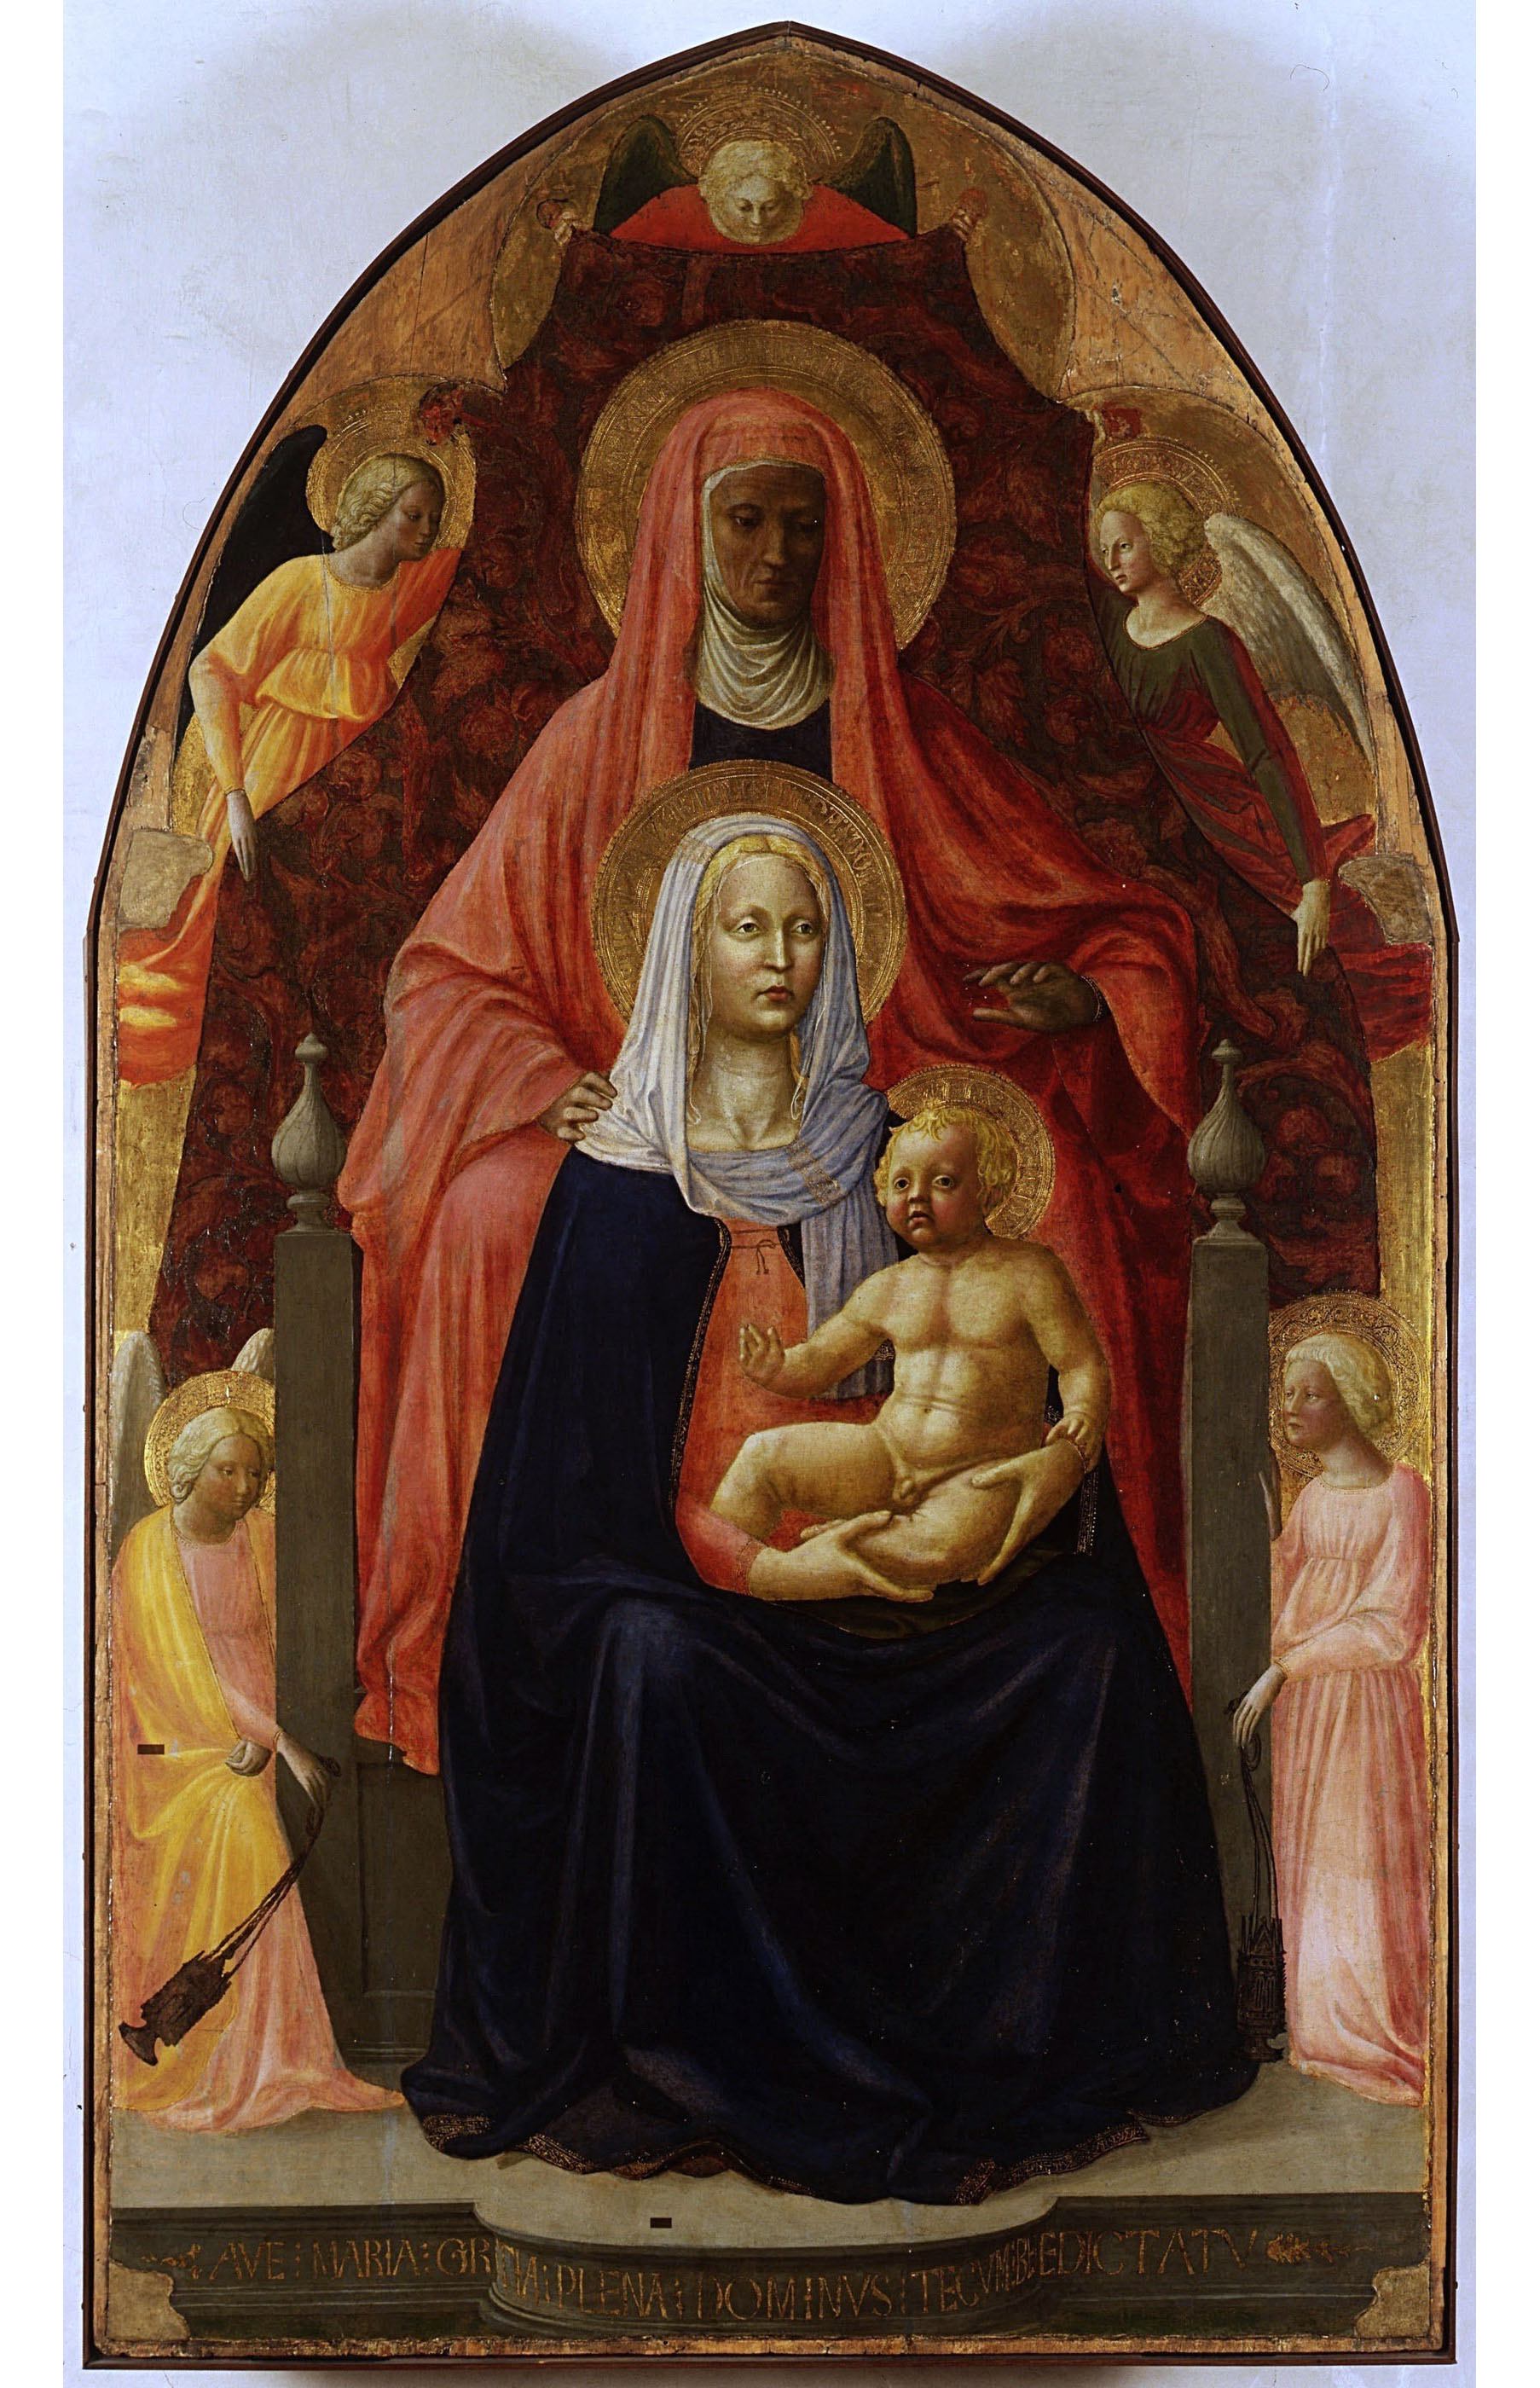 Мазолино и Мазаччо. "Мадонна с Младенцем, святой Анной и ангелами". 1424. Галерея Уффици, Флоренция.